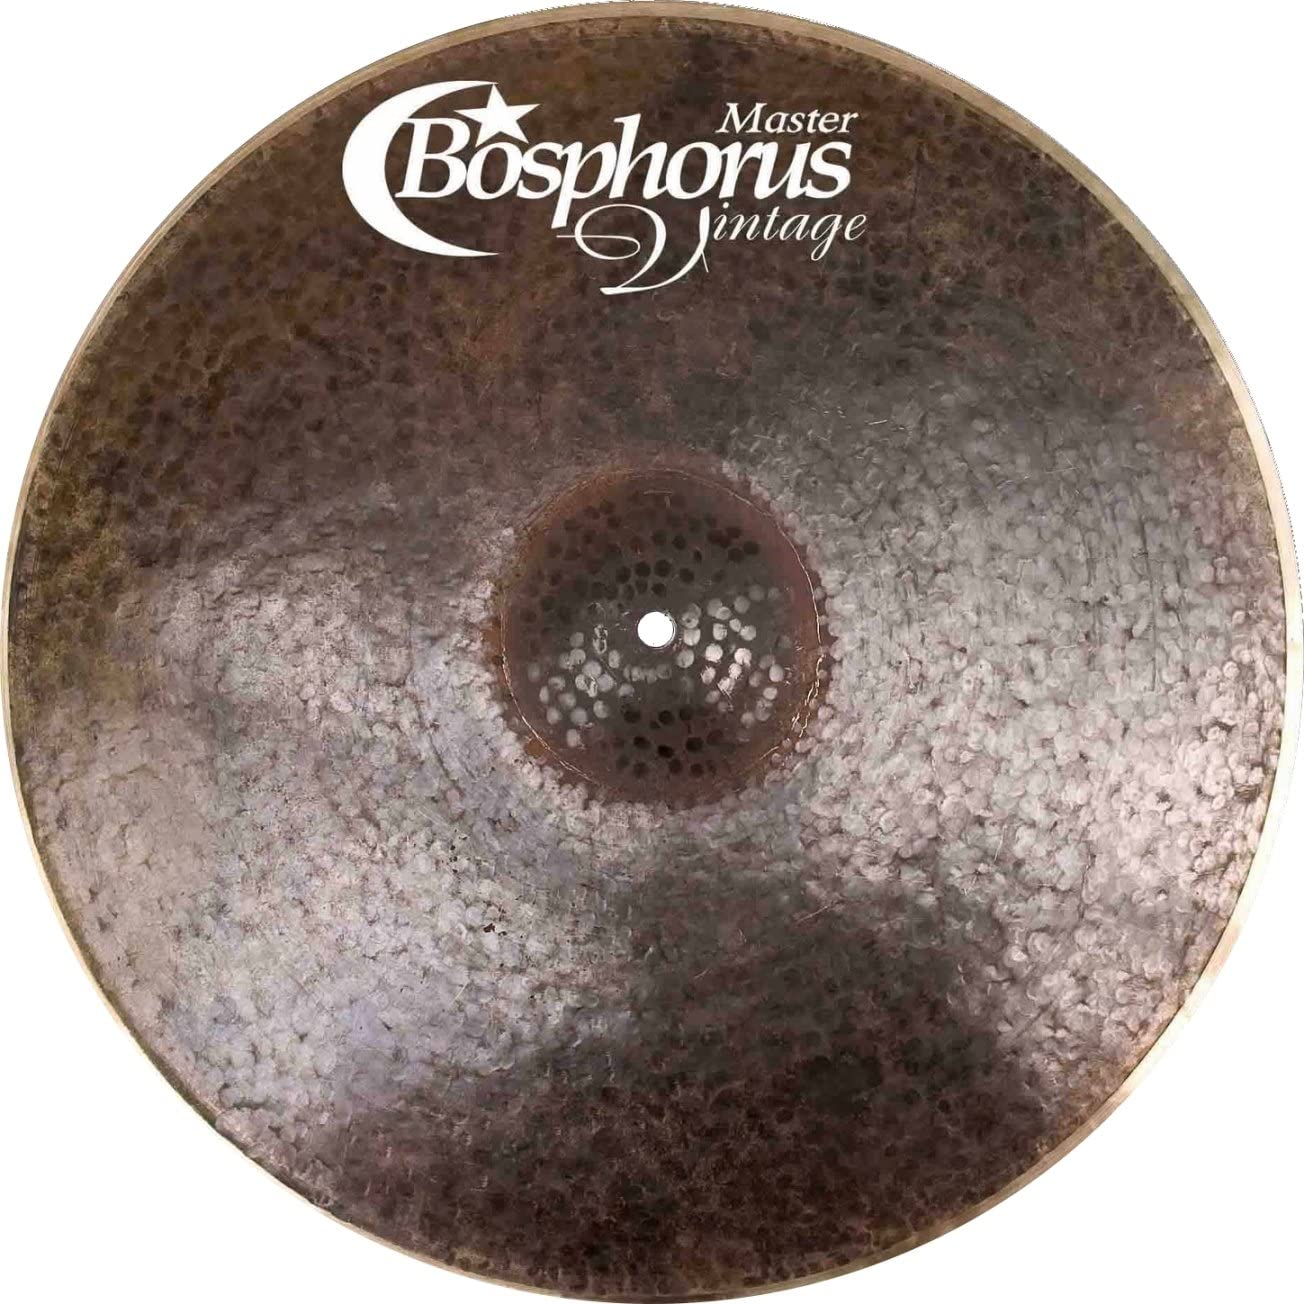 Bosphorus Cymbals MV20R 20-Inch Master